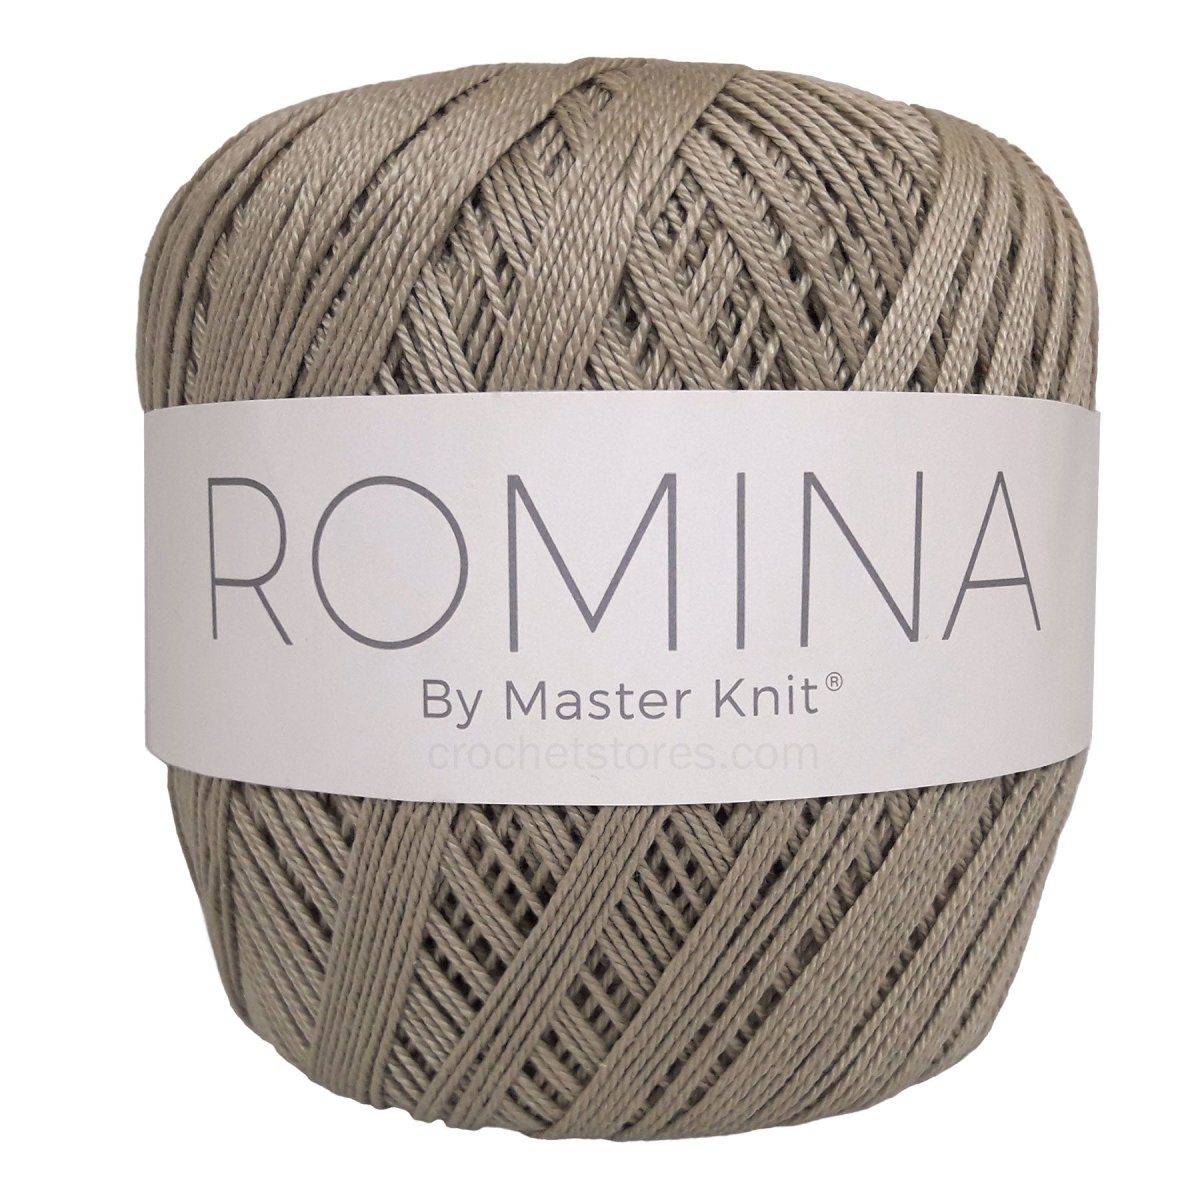 ROMINA - Crochetstores9335-213745051438555